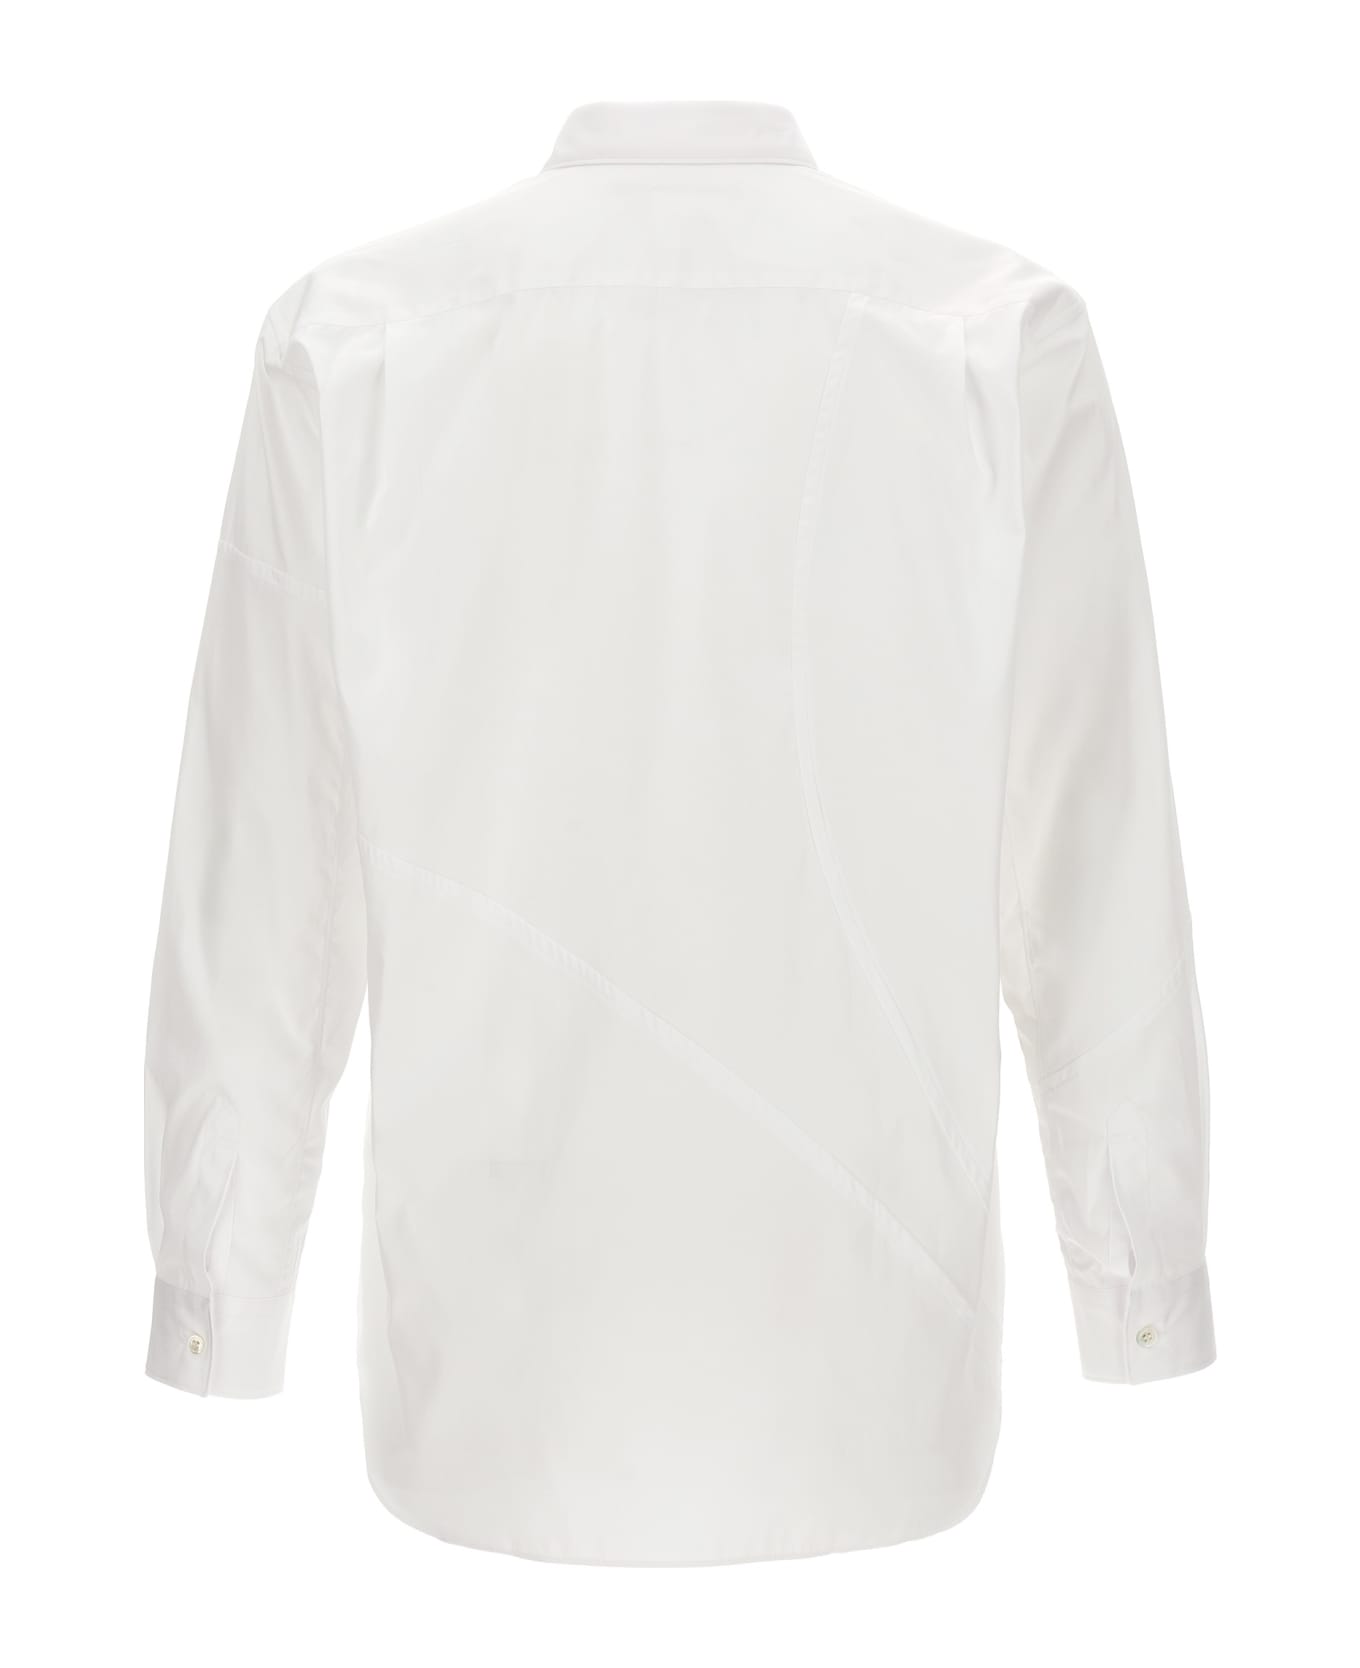 Comme des Garçons Shirt 'andy Warhol' Shirt - White Print